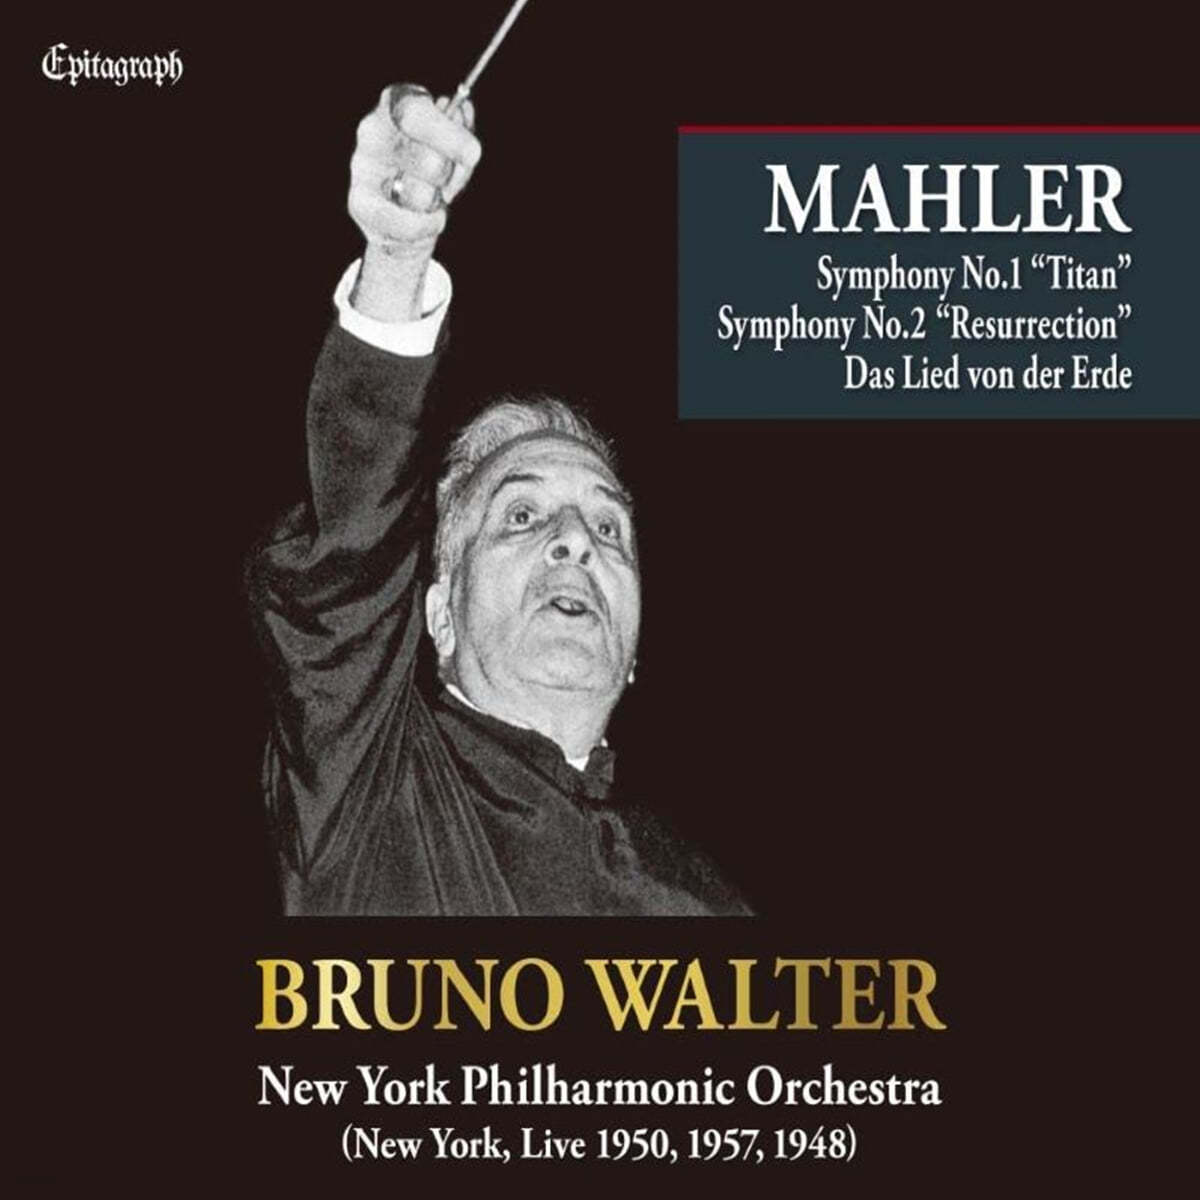 Bruno Walter 말러: 교향곡 1번, 2번, 대지의 노래 - 브루노 발터 (Mahler: Symphony Collection)